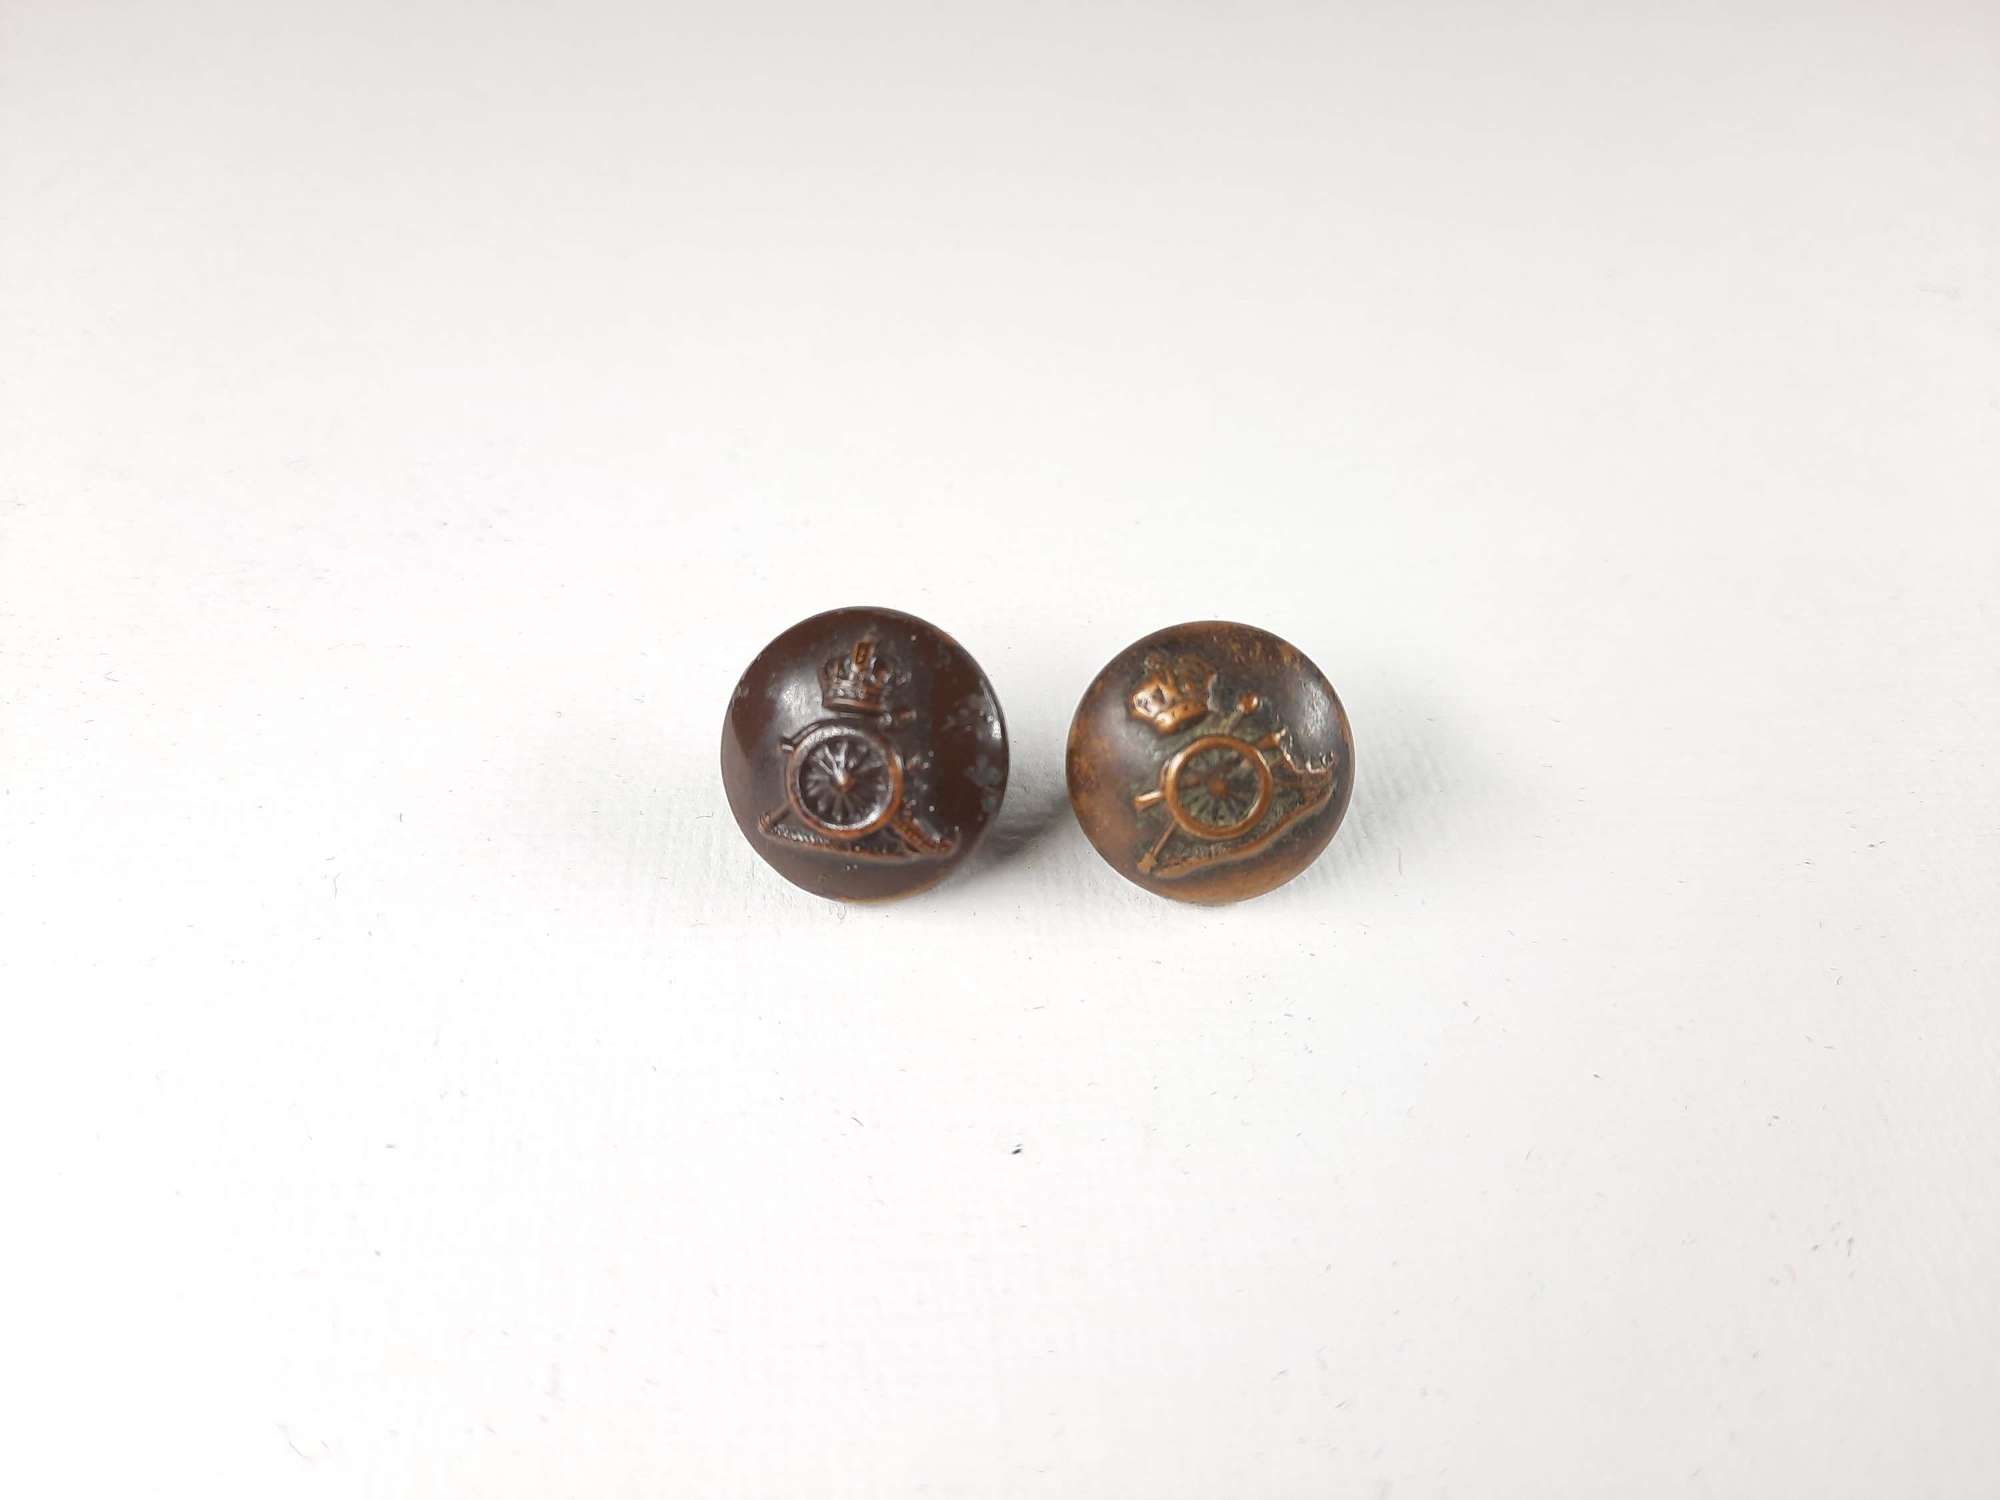 Pair of Royal Artillery Side Cap Buttons